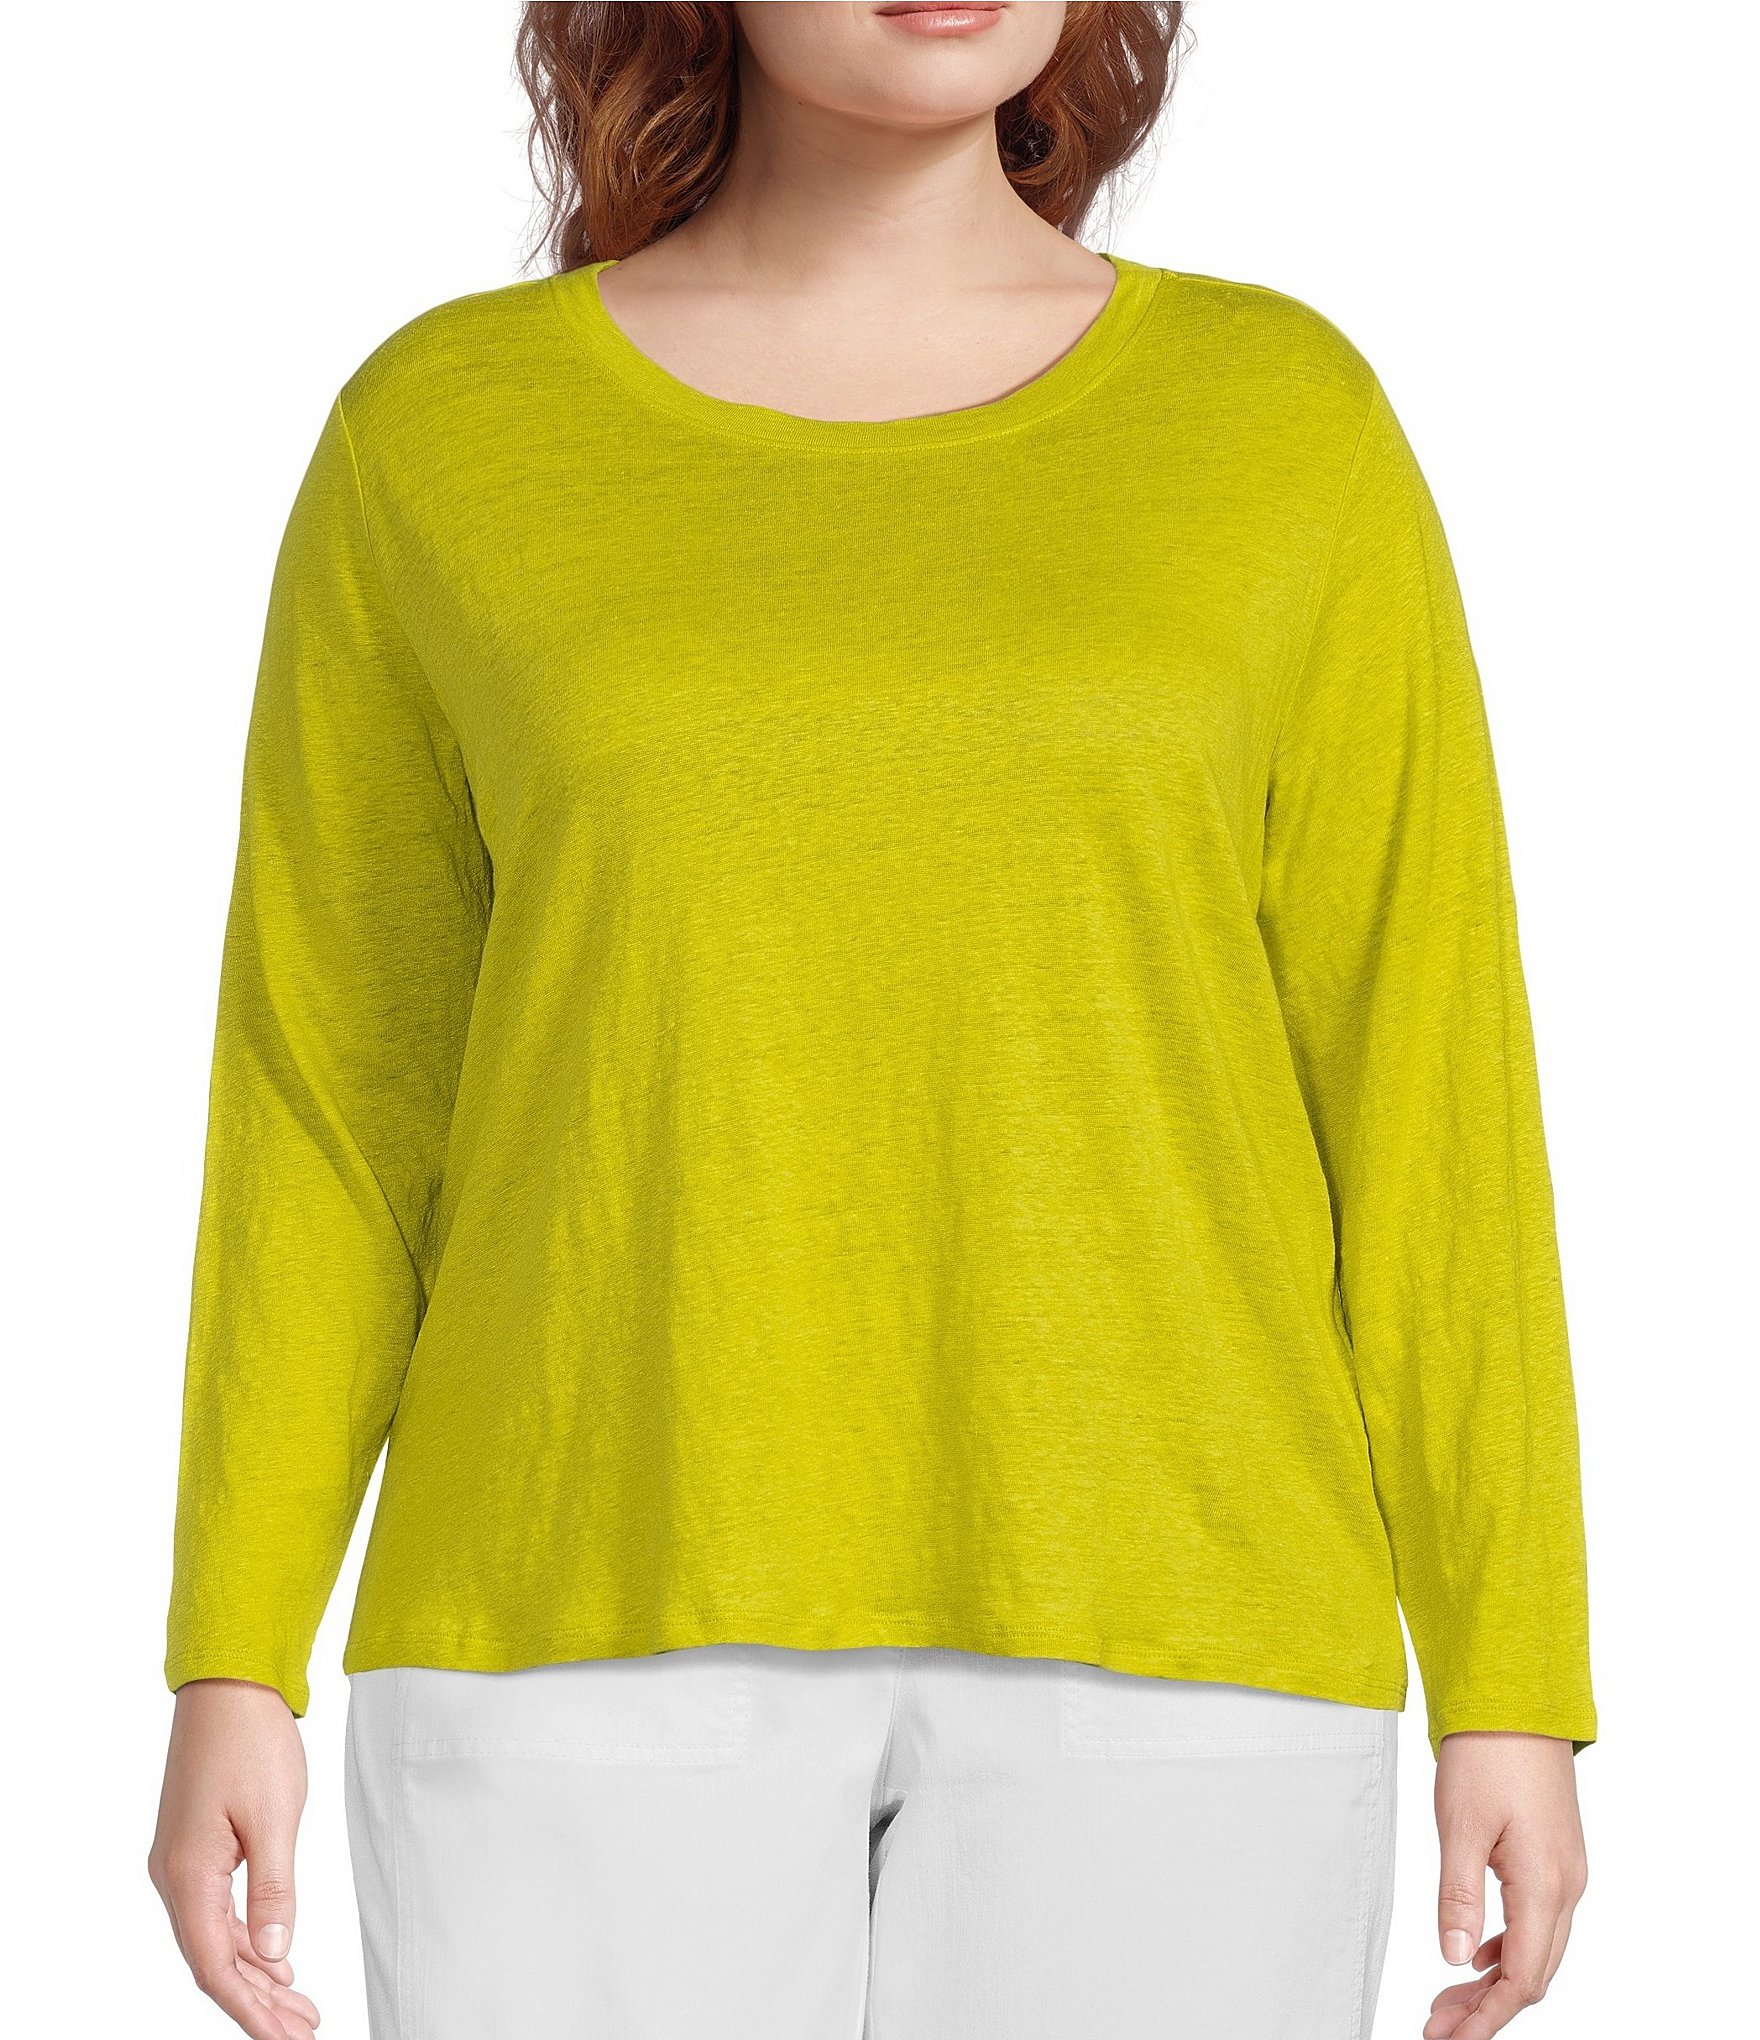 Eileen Fisher Plus Size Organic Pima Cotton Jersey V-Neck Short